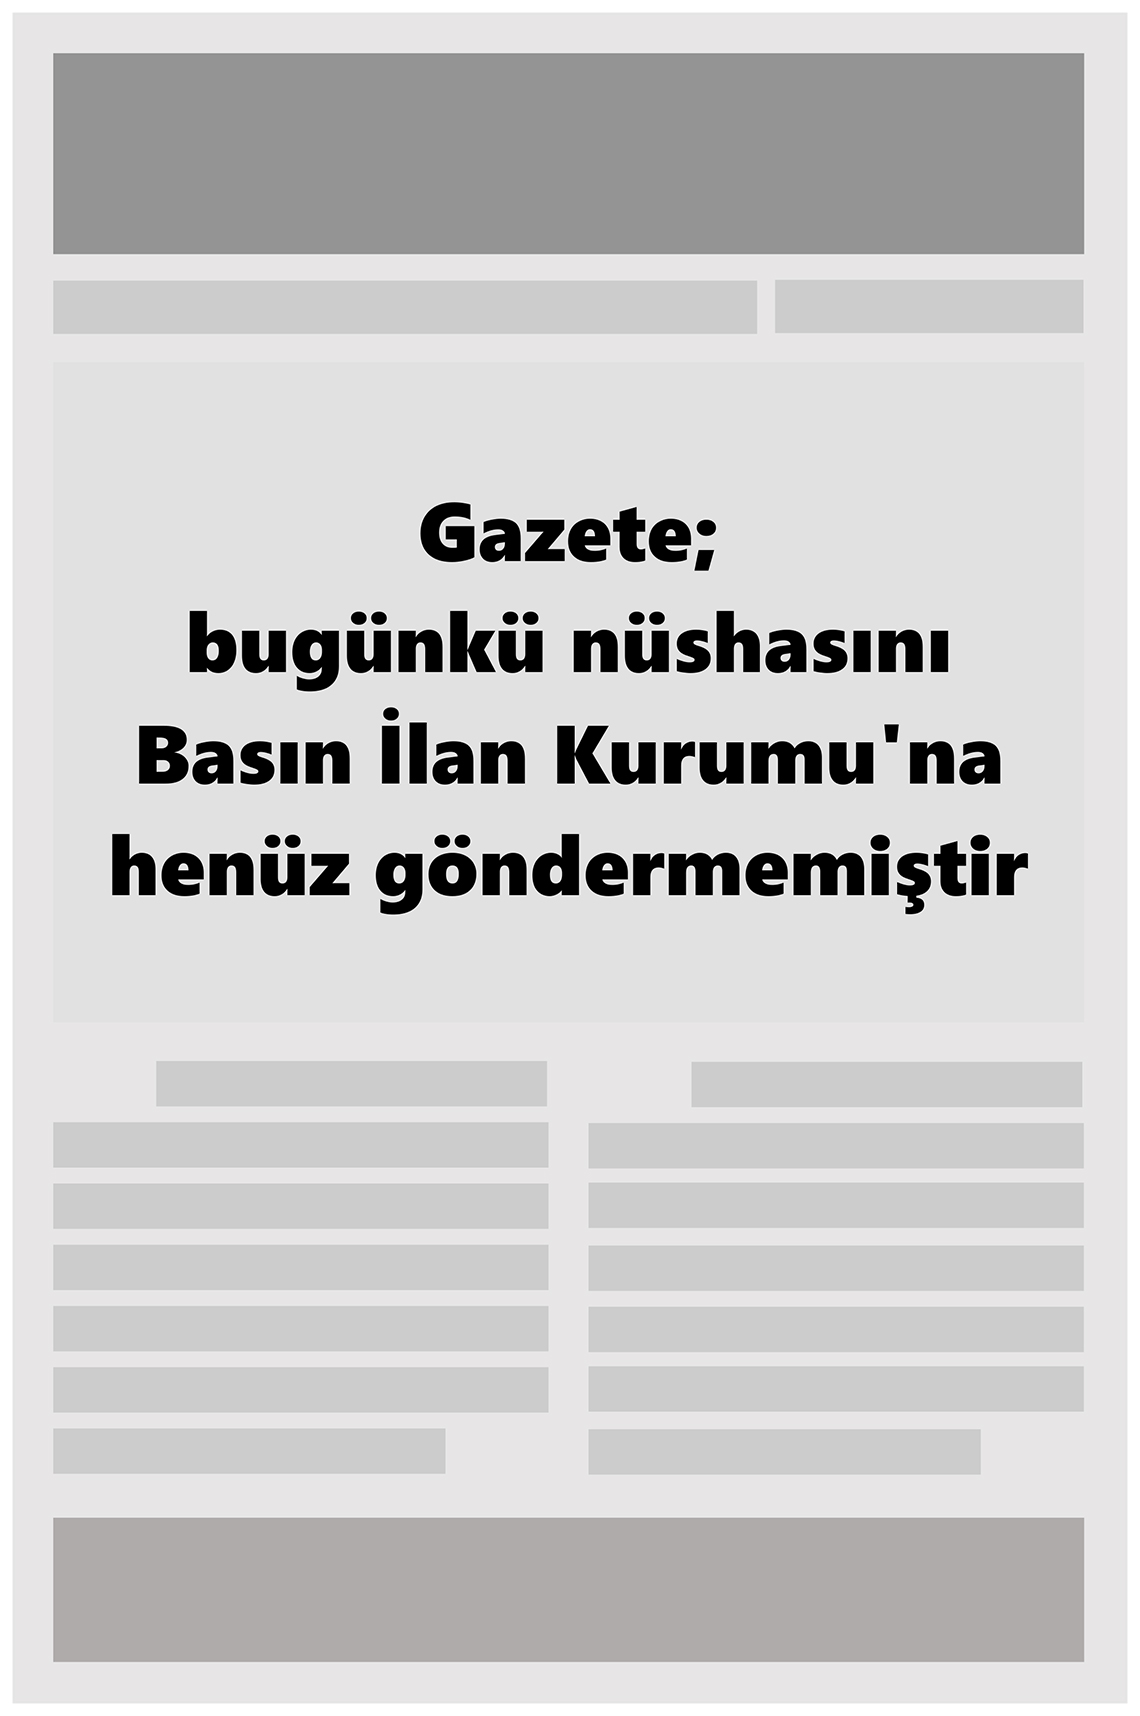 Yeni Adana Gazete Manşeti